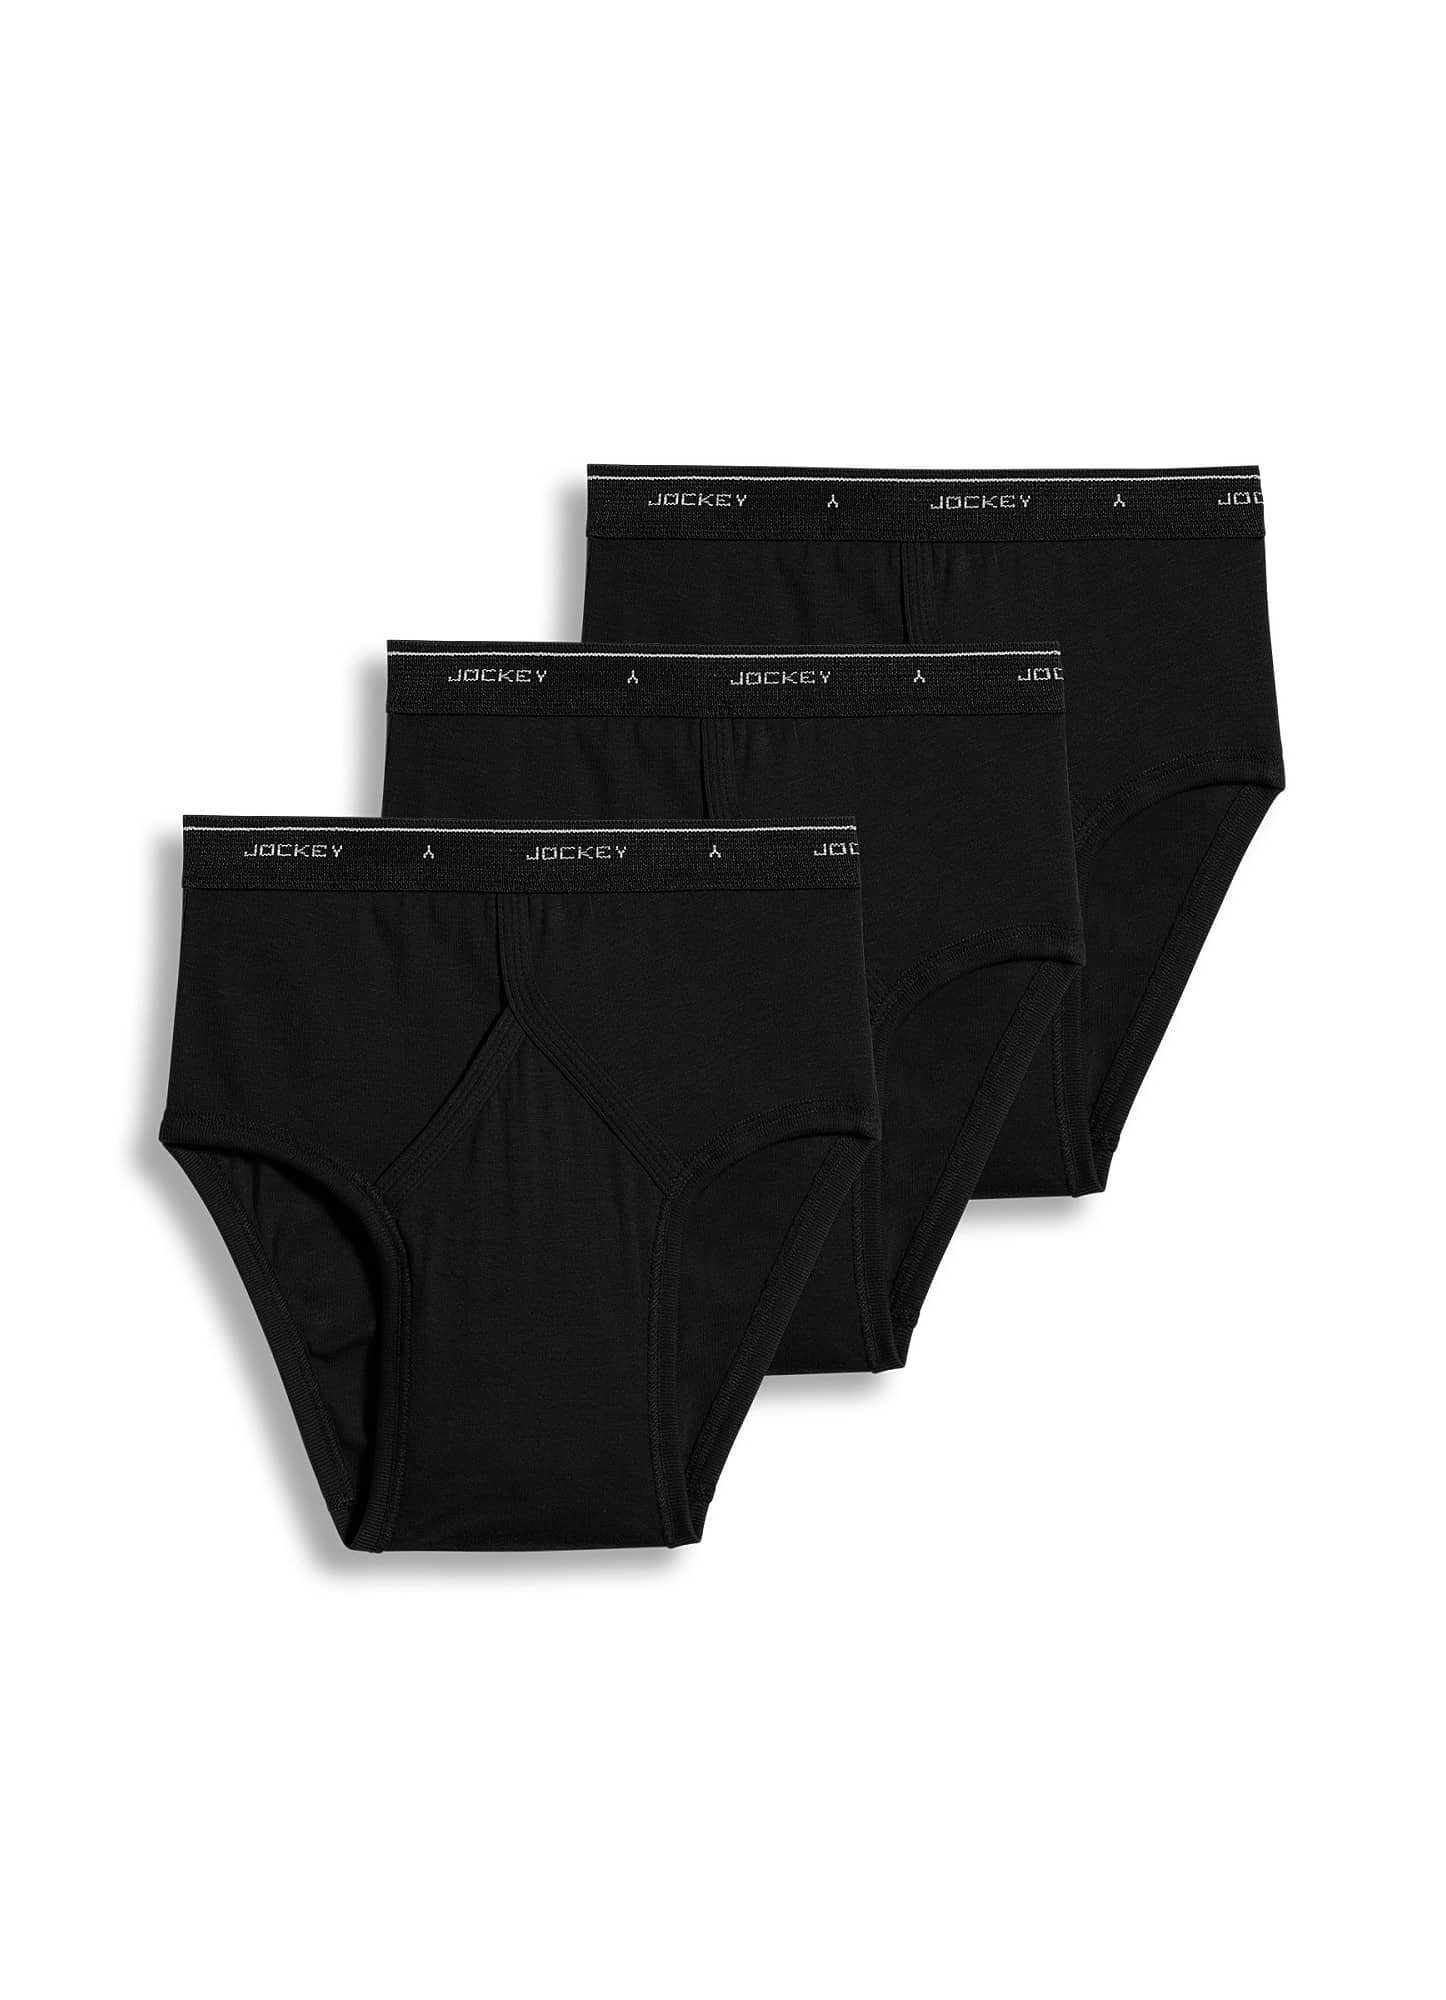 Jockey Men's Underwear Classic Low Rise Brief - 3 Pack